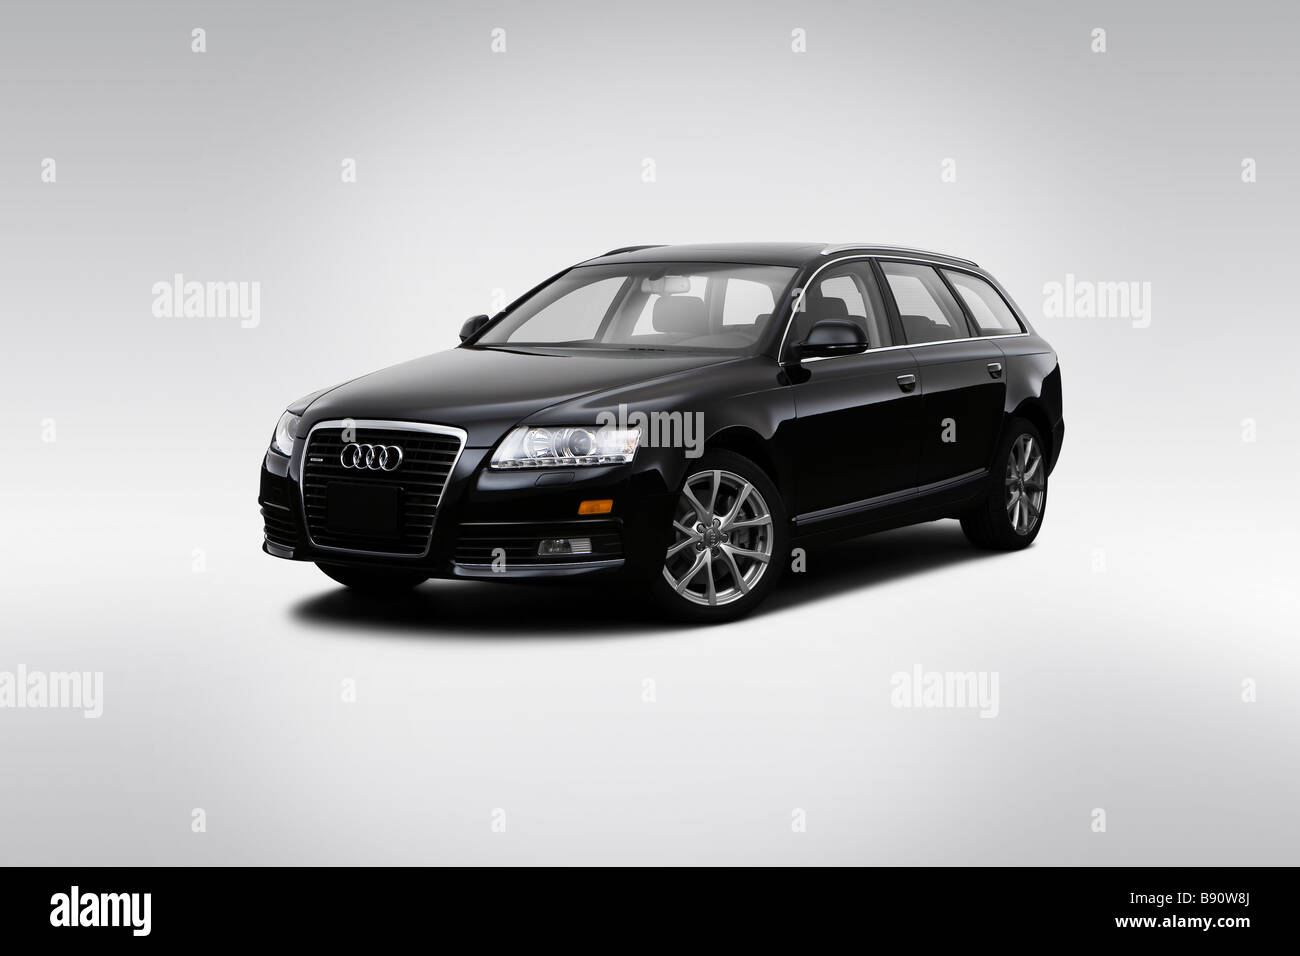 2009 Audi A6 Avant 3.0 quattro Black - Front angle view Stock Photo - Alamy